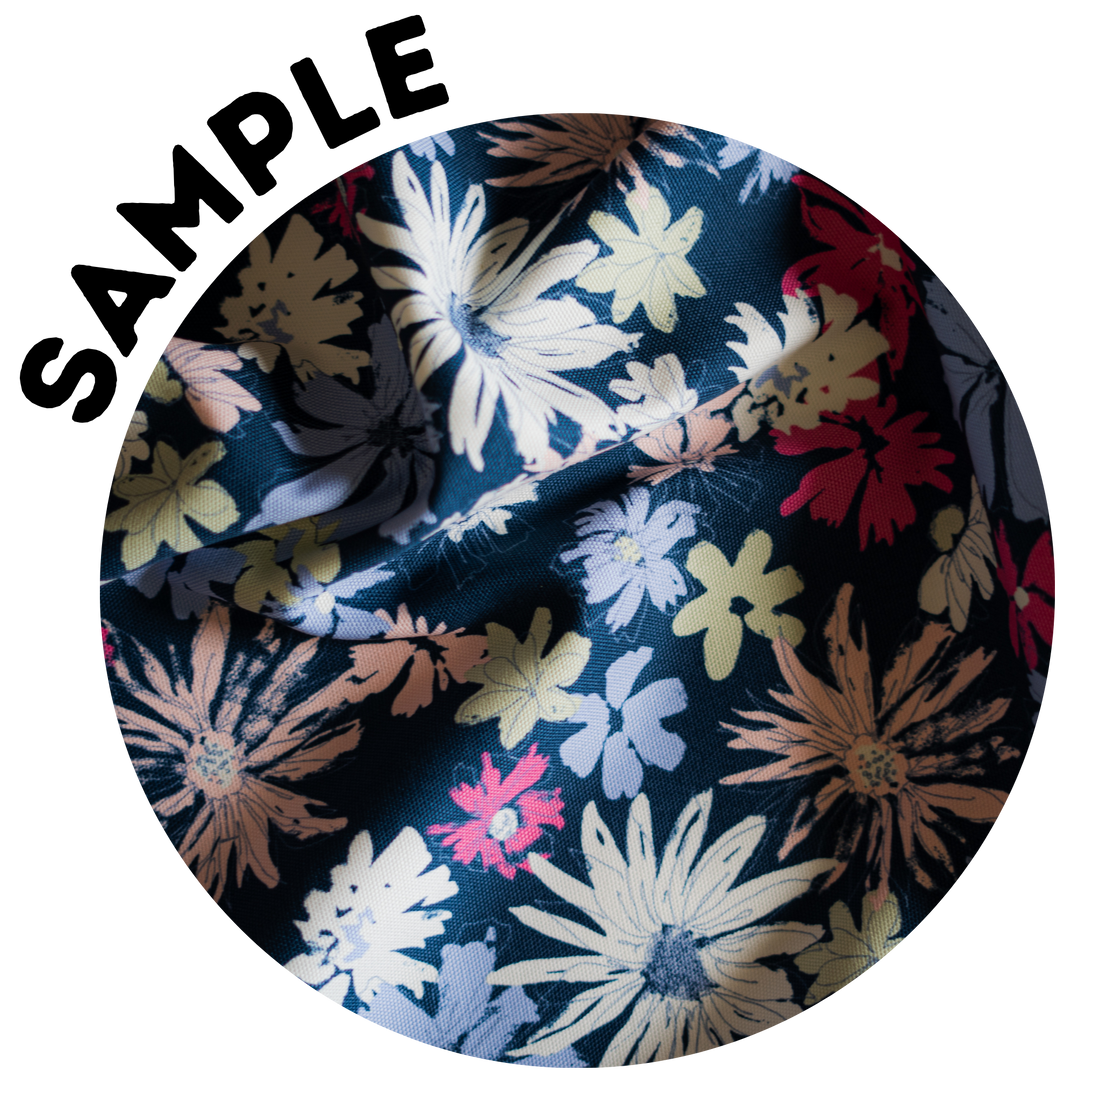 Lilac - Modal Fabric – sewecofabrics